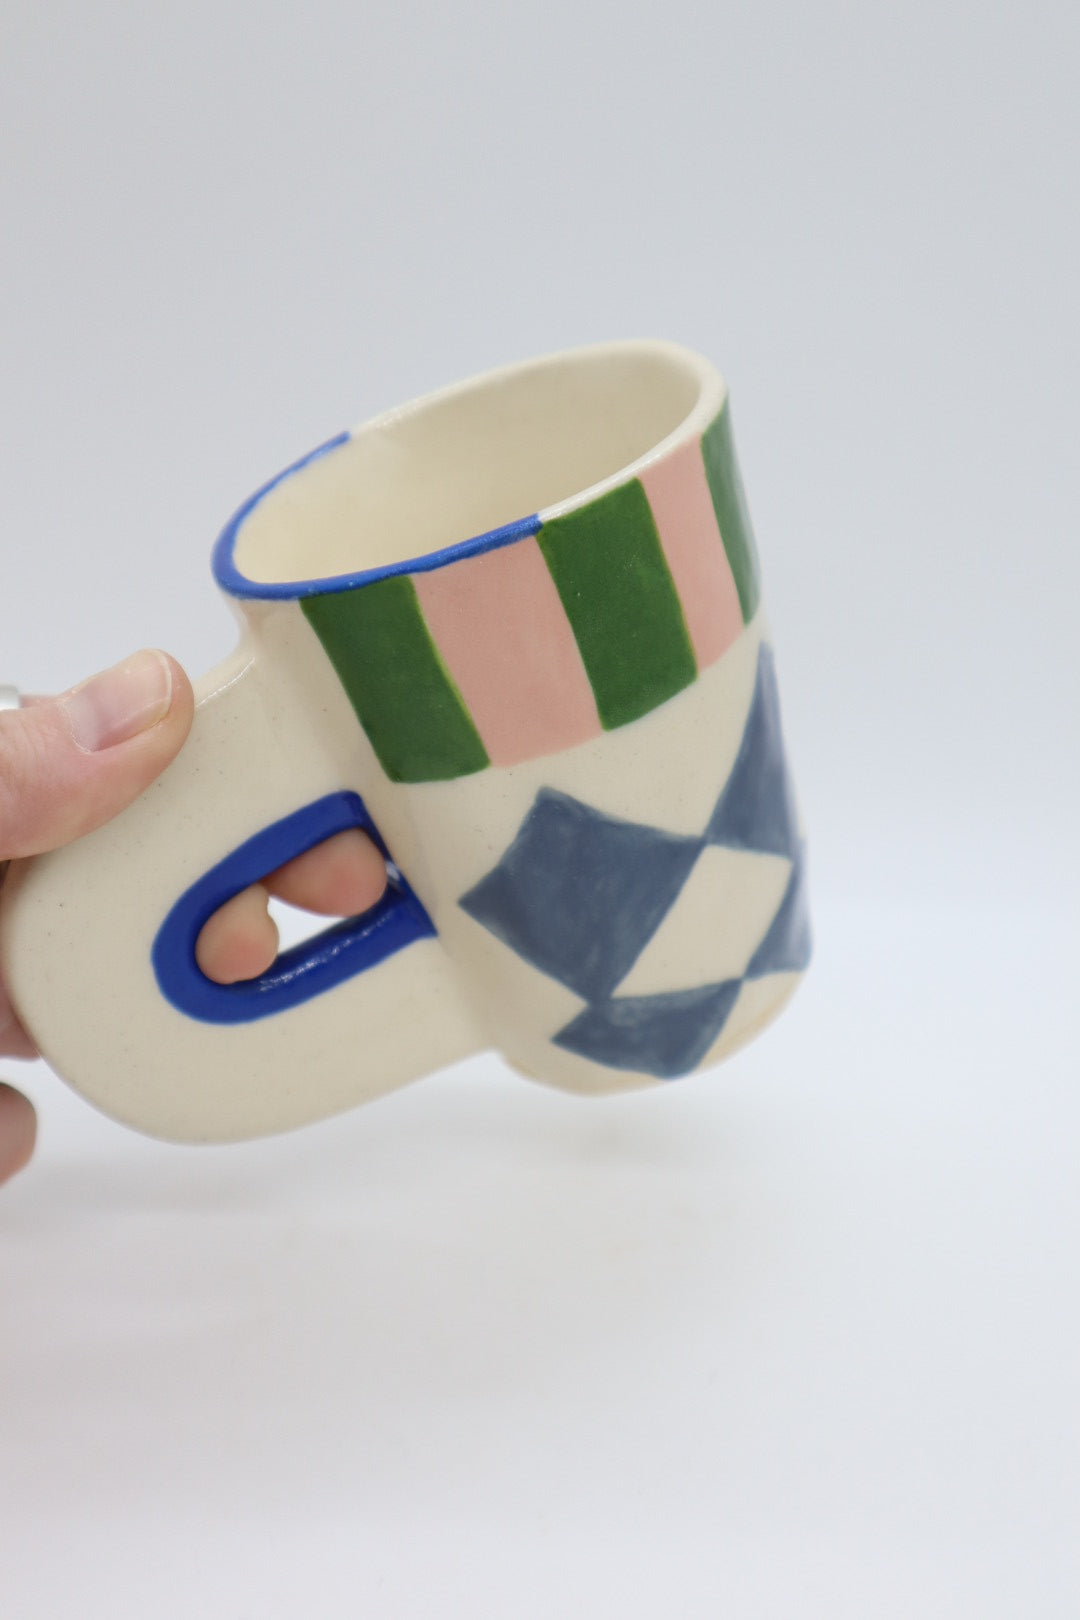 Blue Pink & Green Mini Mug